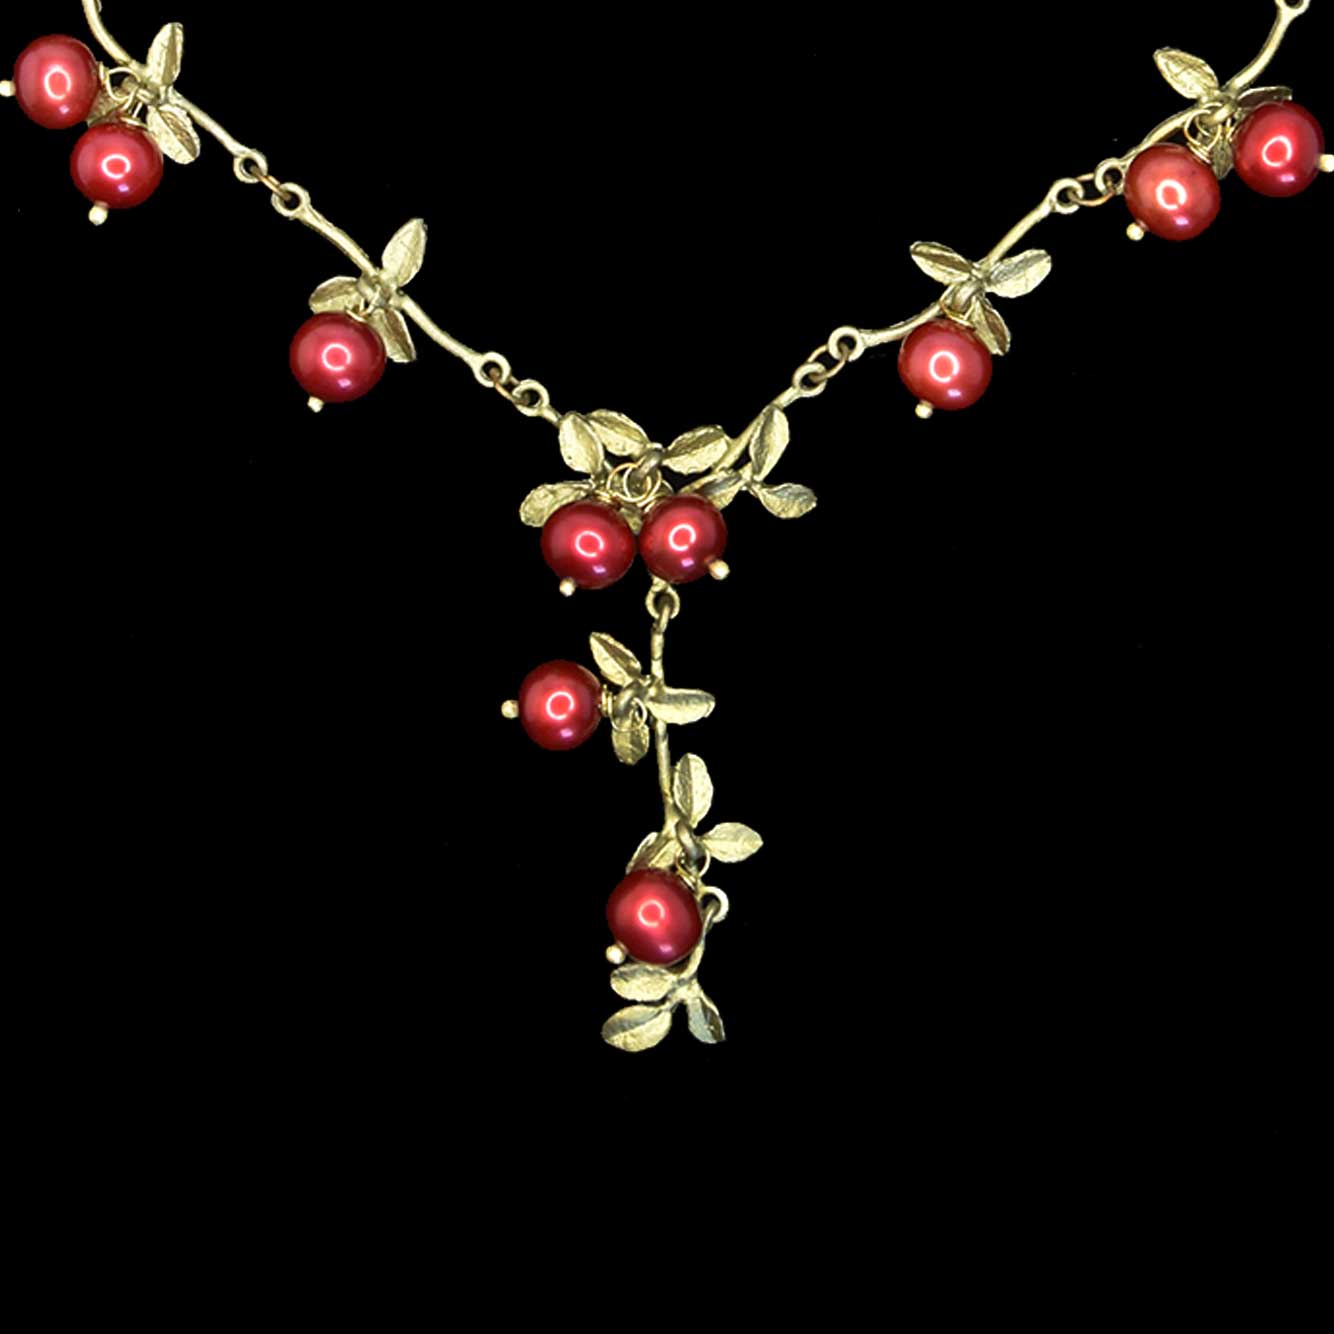 Cranberry Necklace - Statement